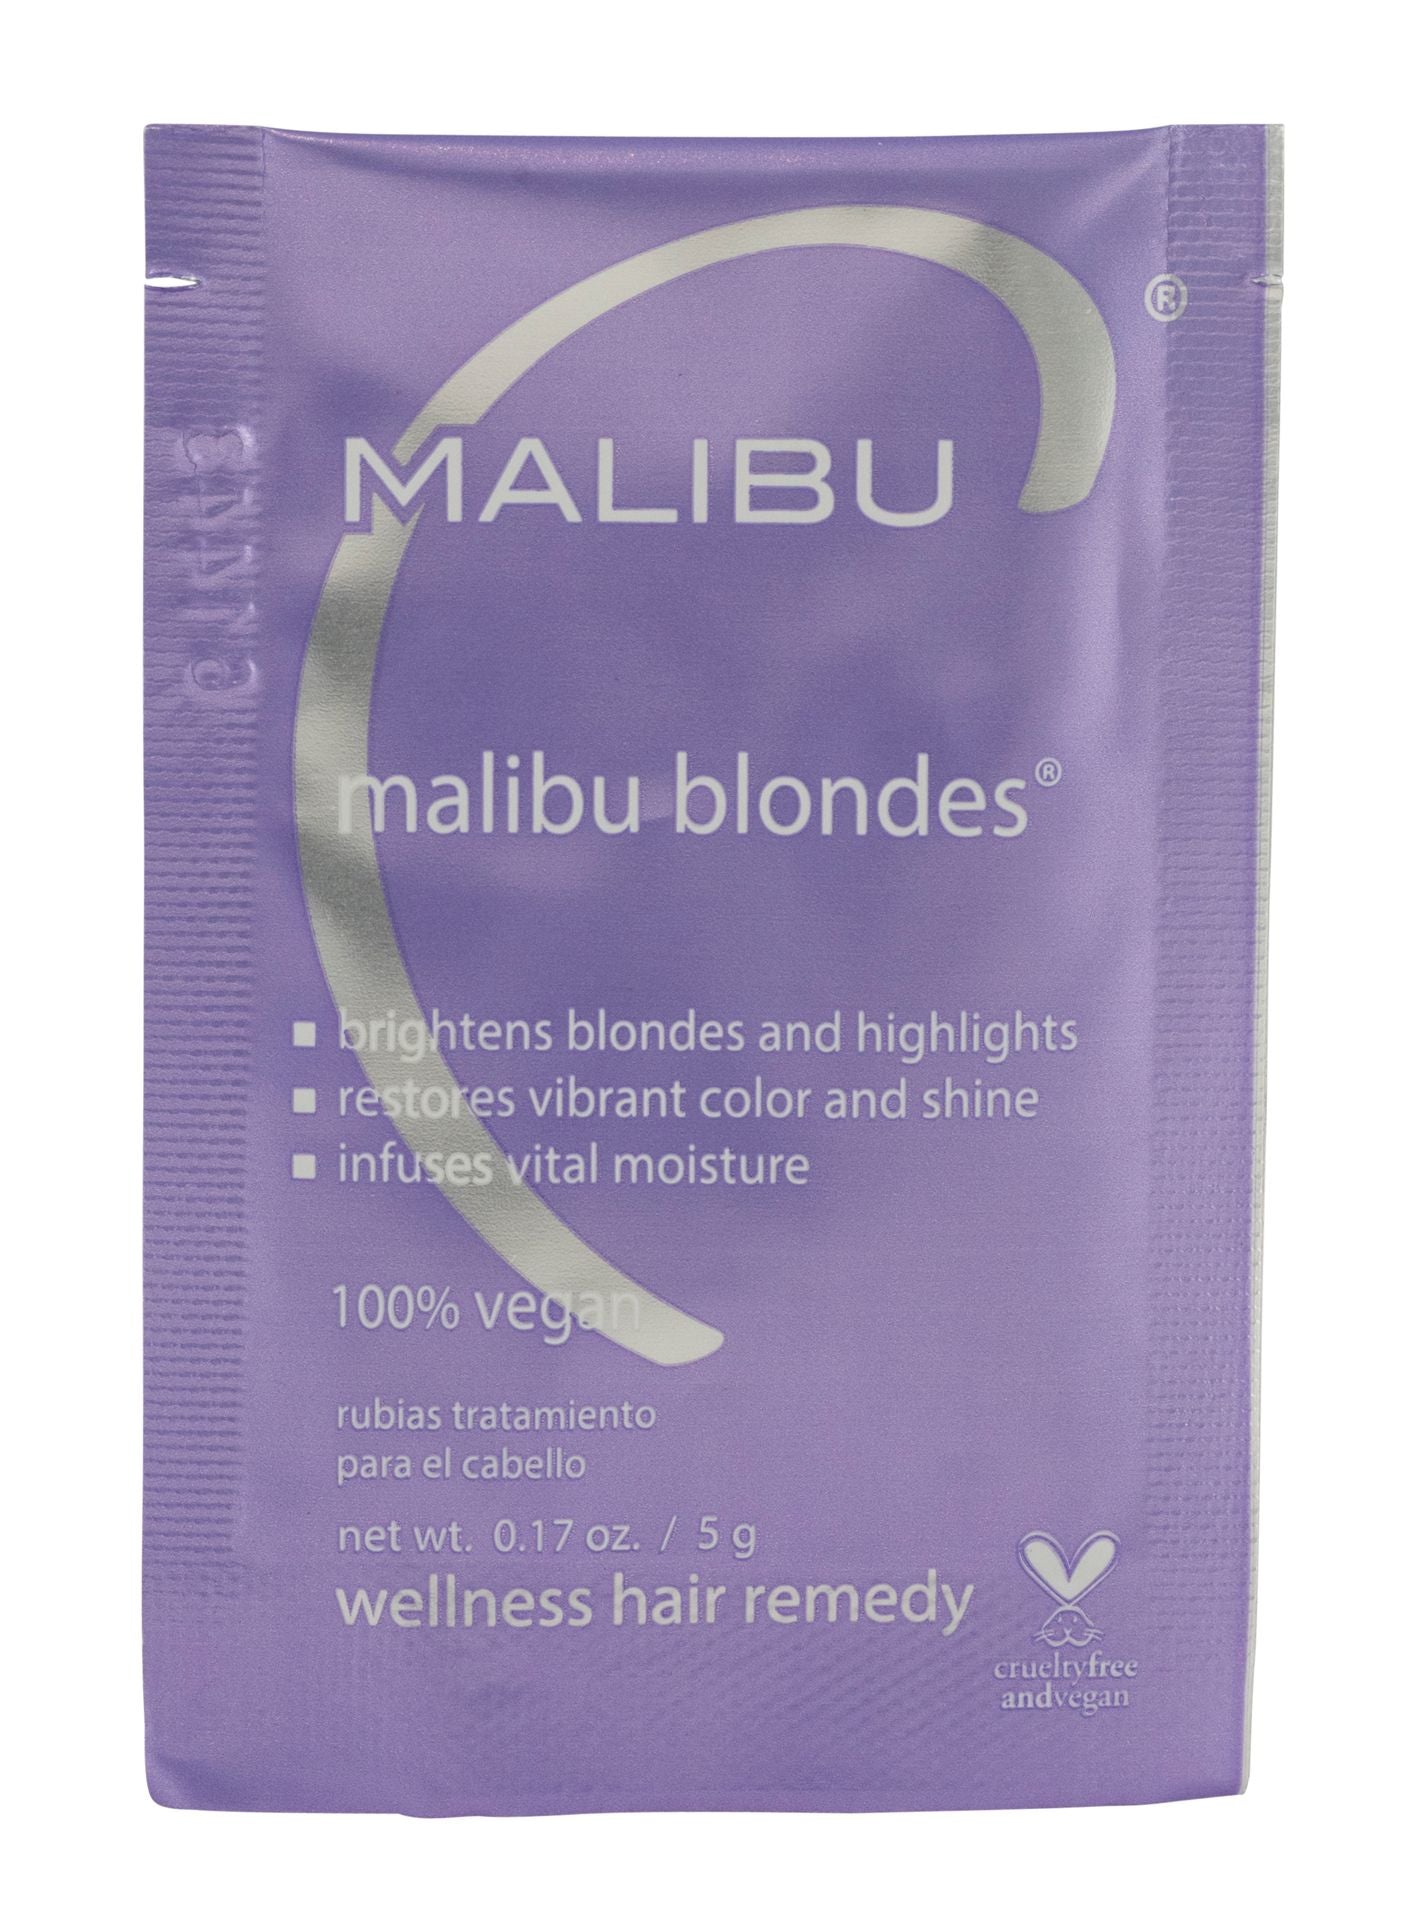 Malibu C Wellness Treatments 12pc - Blondes